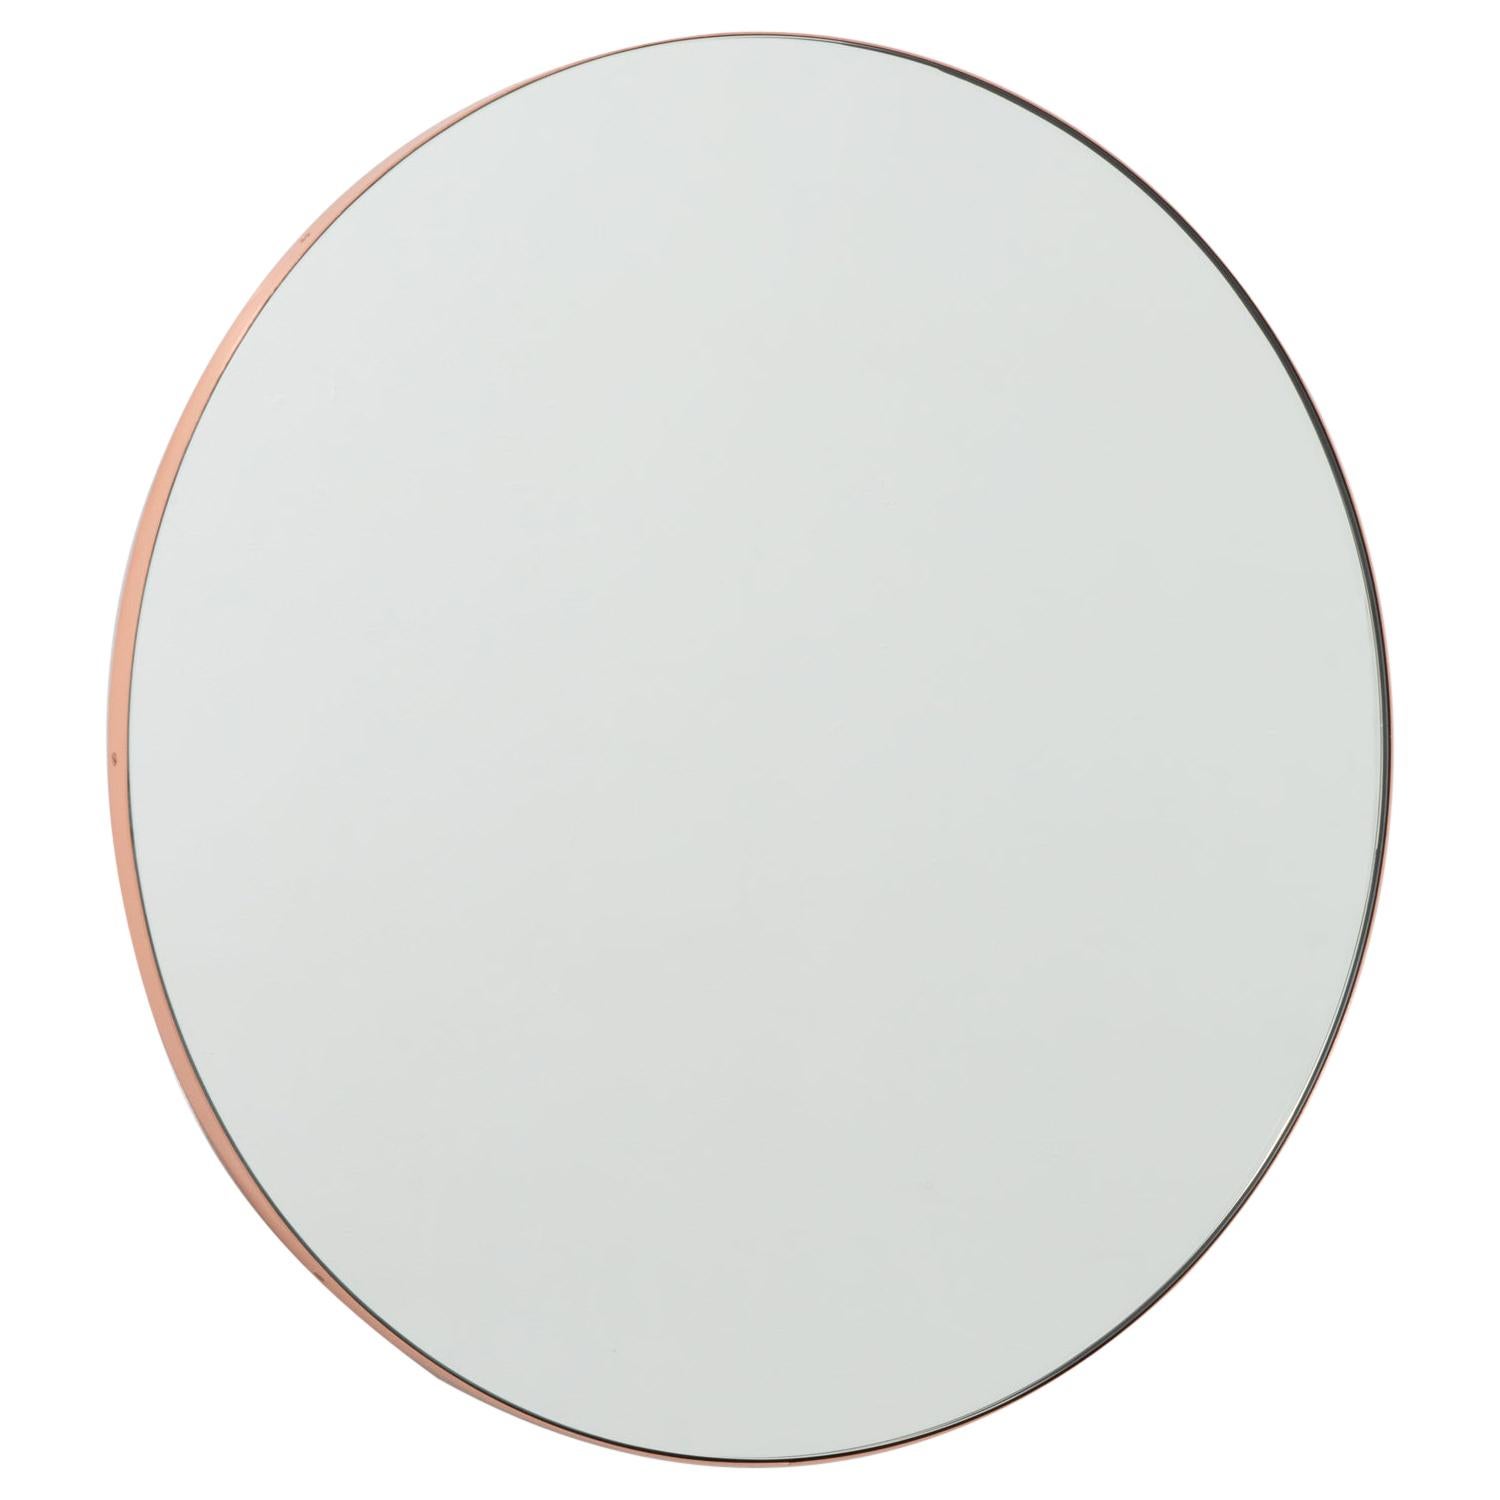 Orbis Round Contemporary Mirror with Copper Frame - Medium